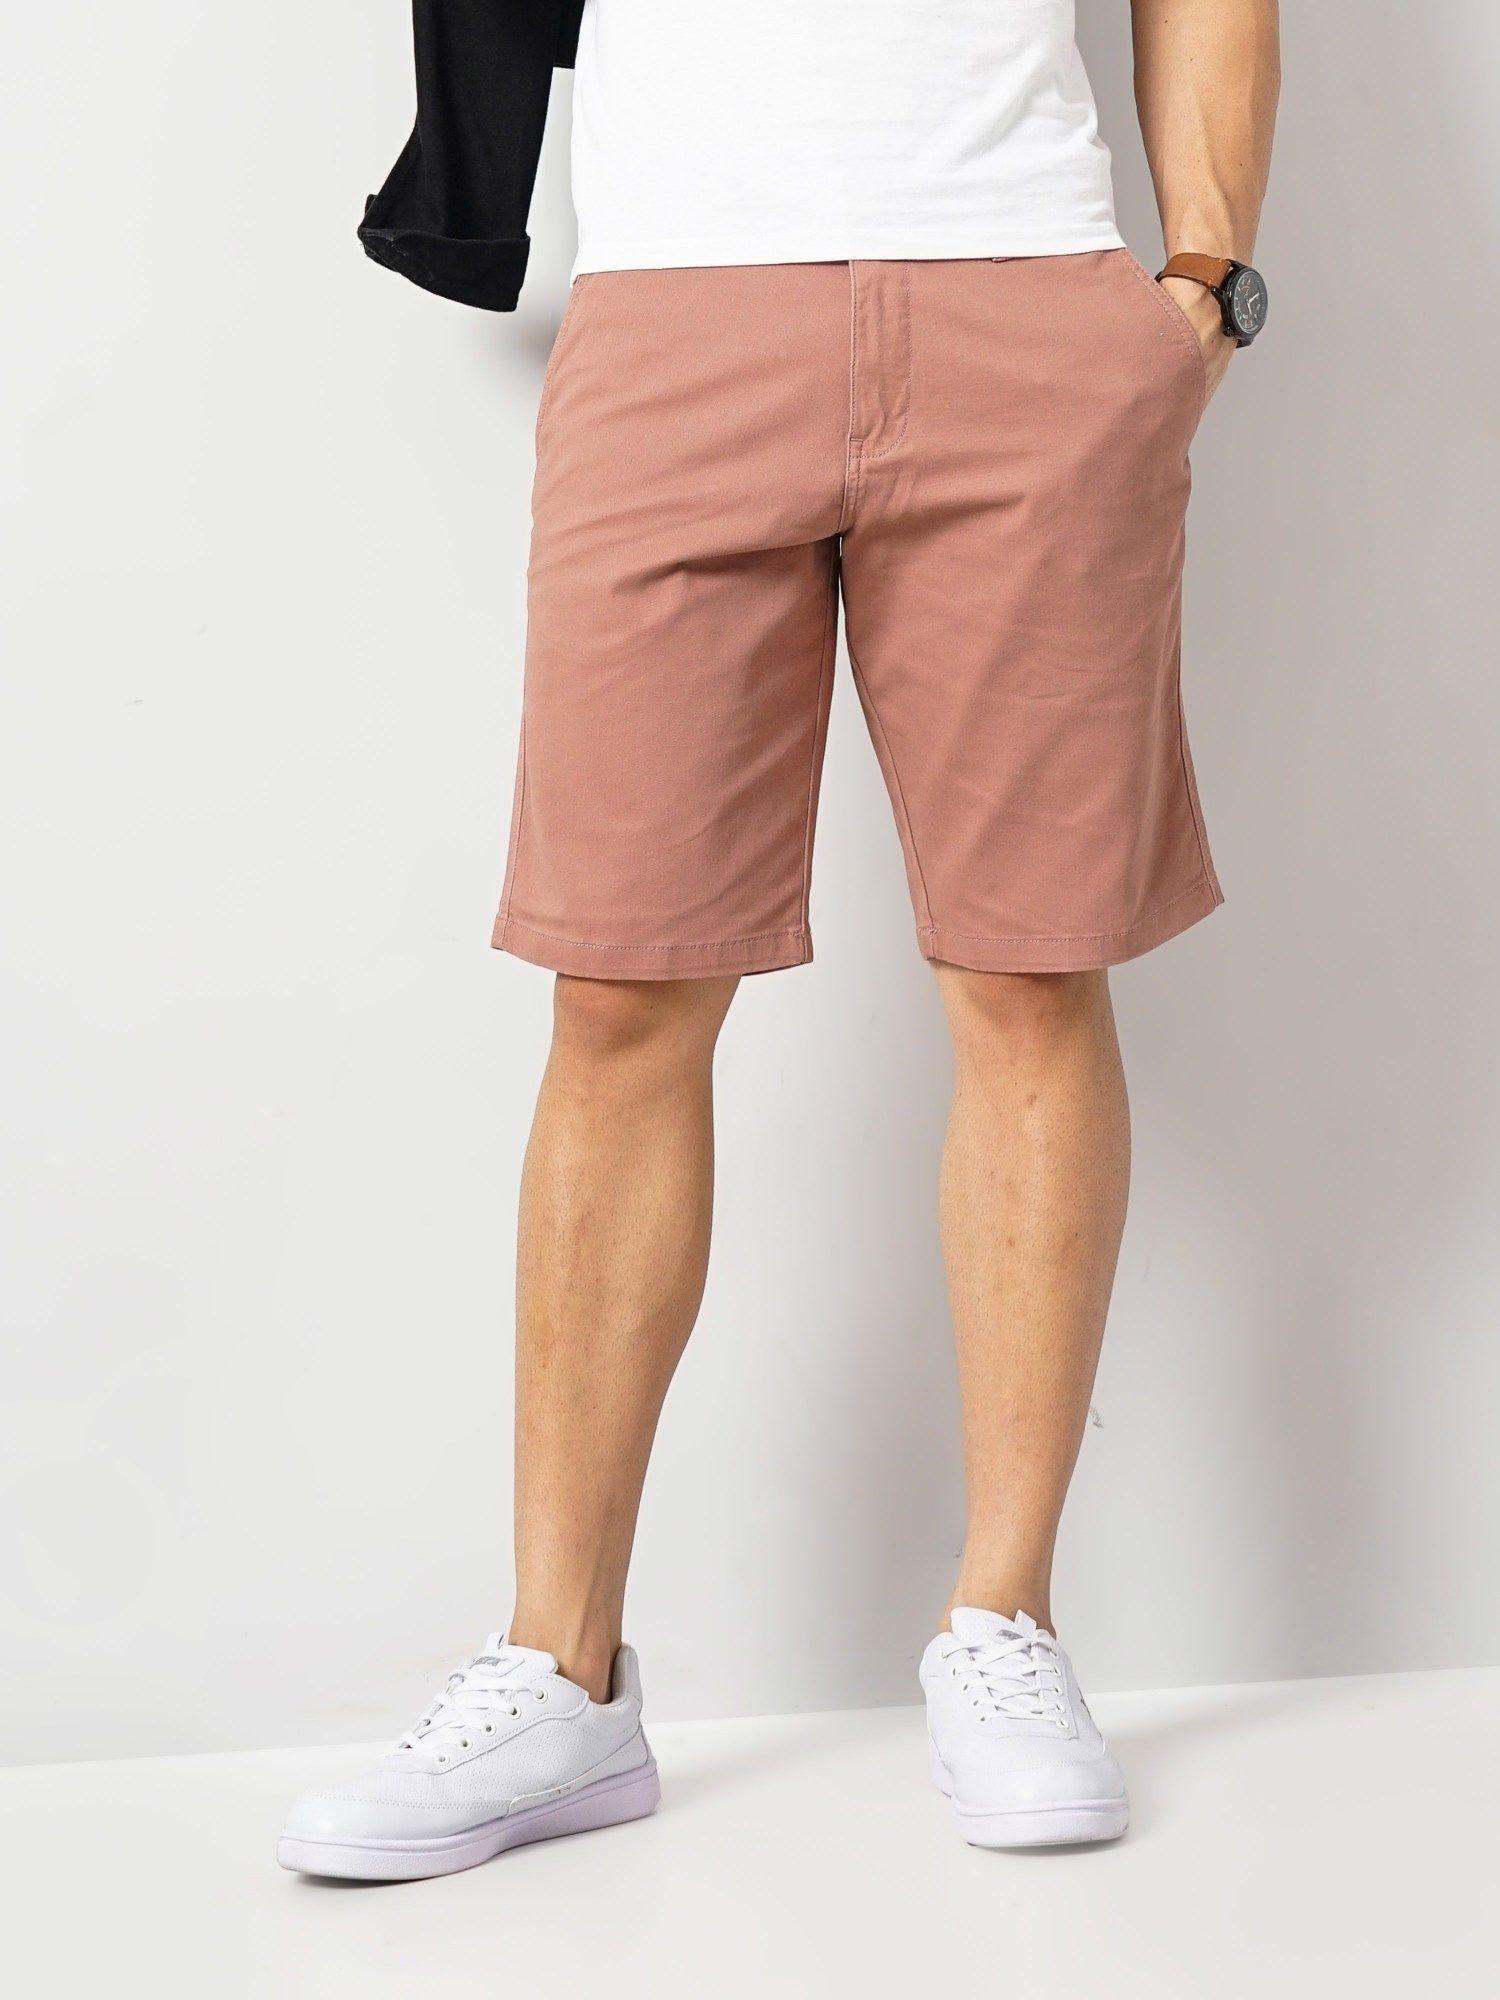 men's pink solid shorts